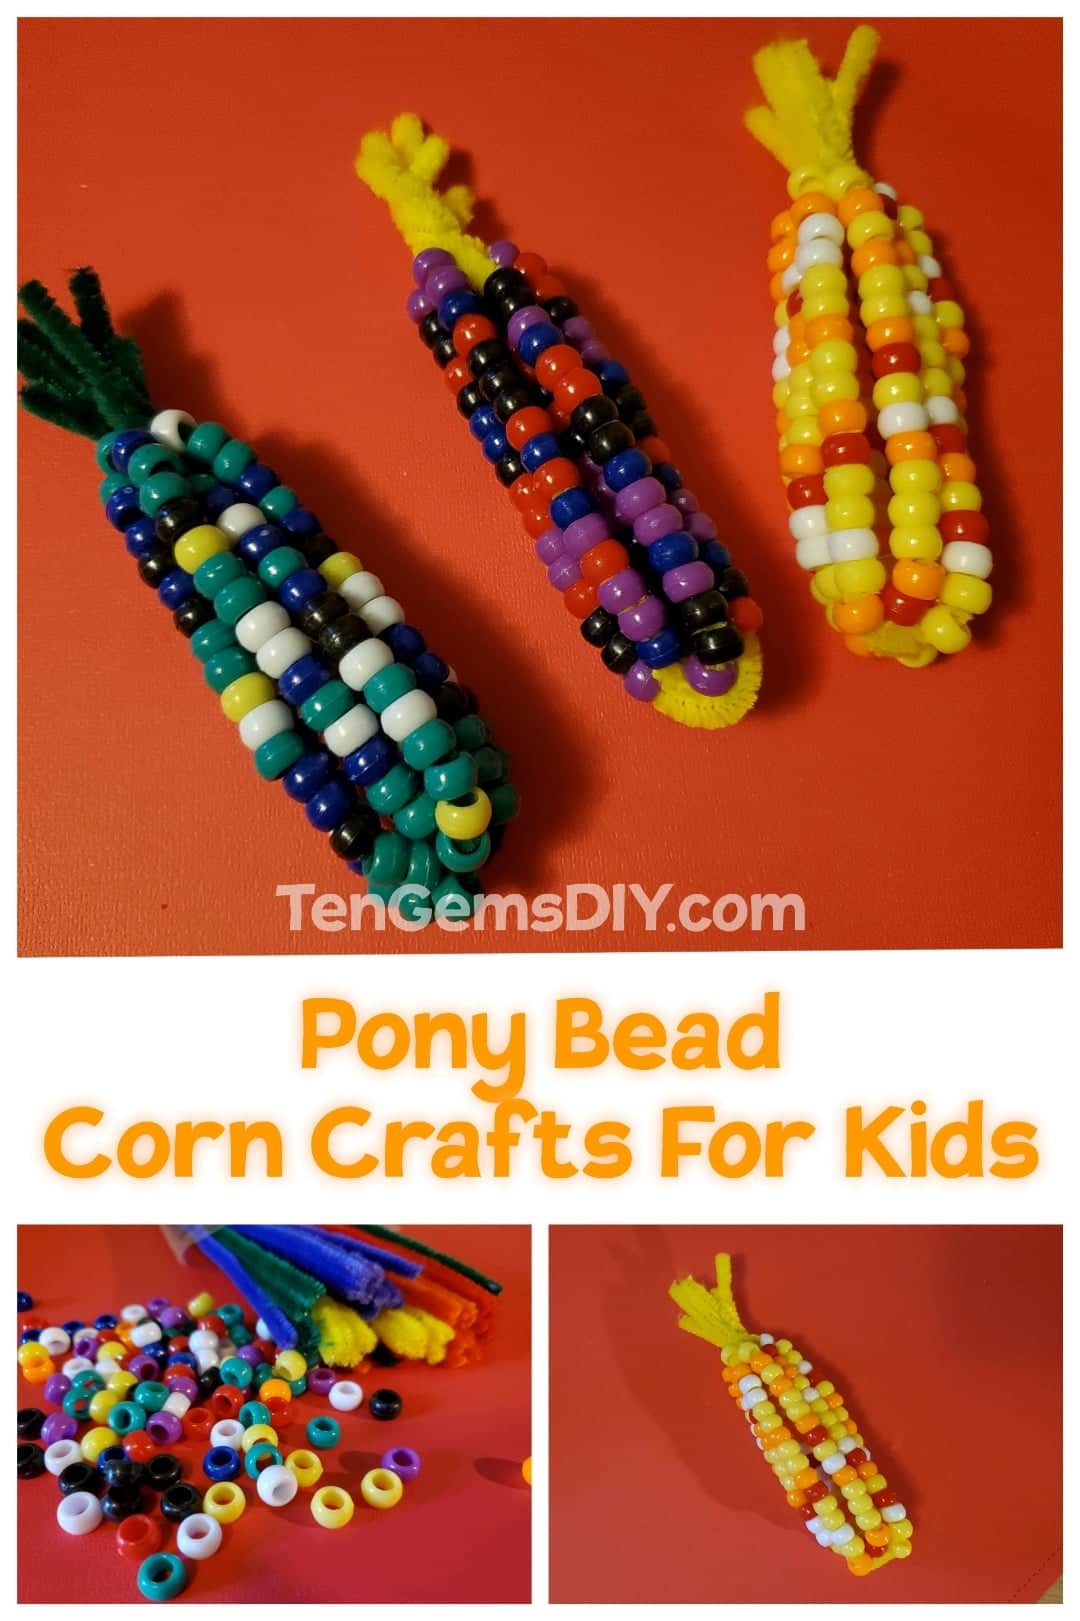 Pony Bead Corn Crafts For Kids